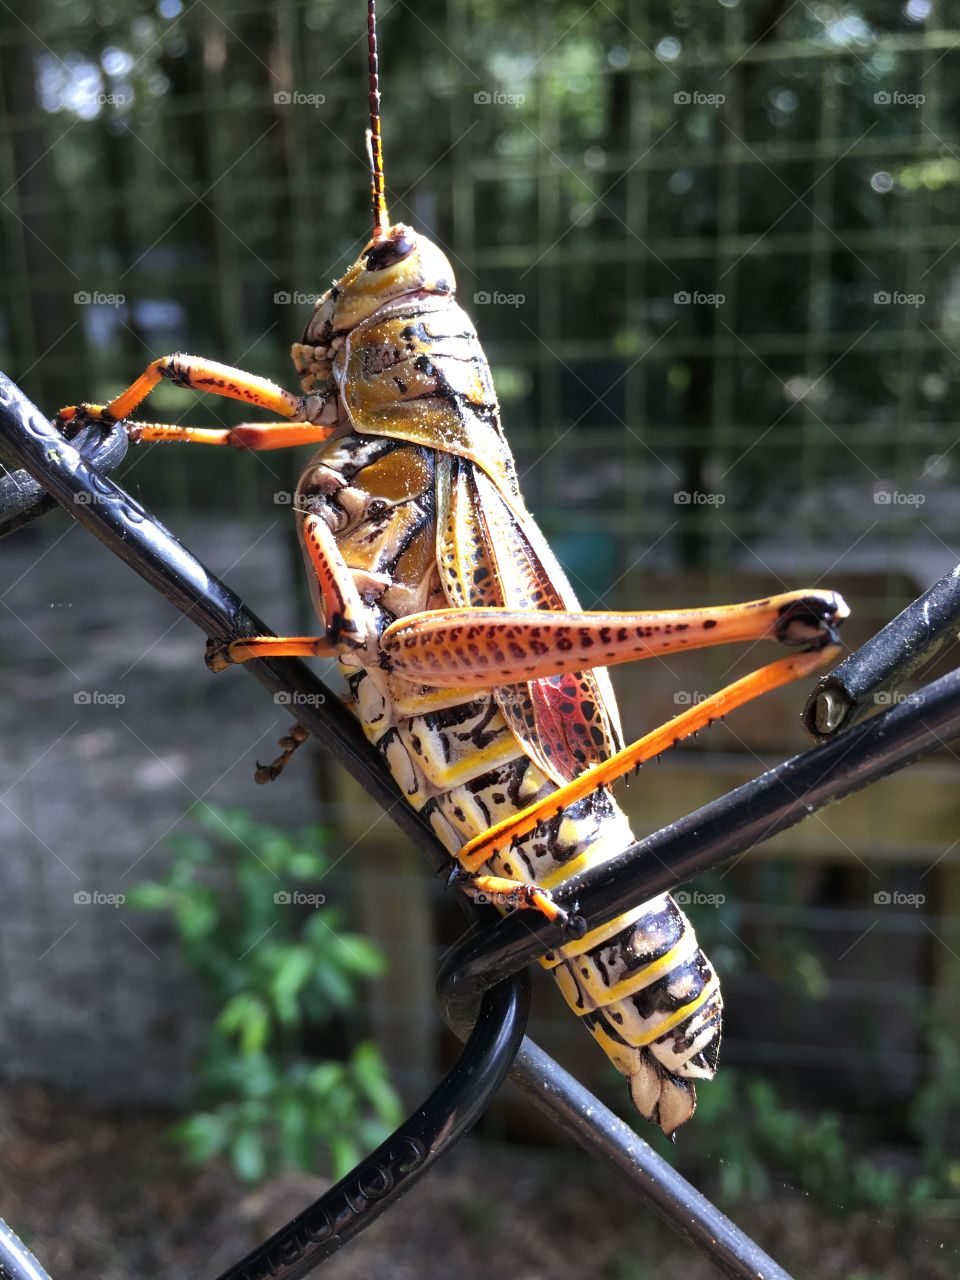 Grasshopper on a fence 